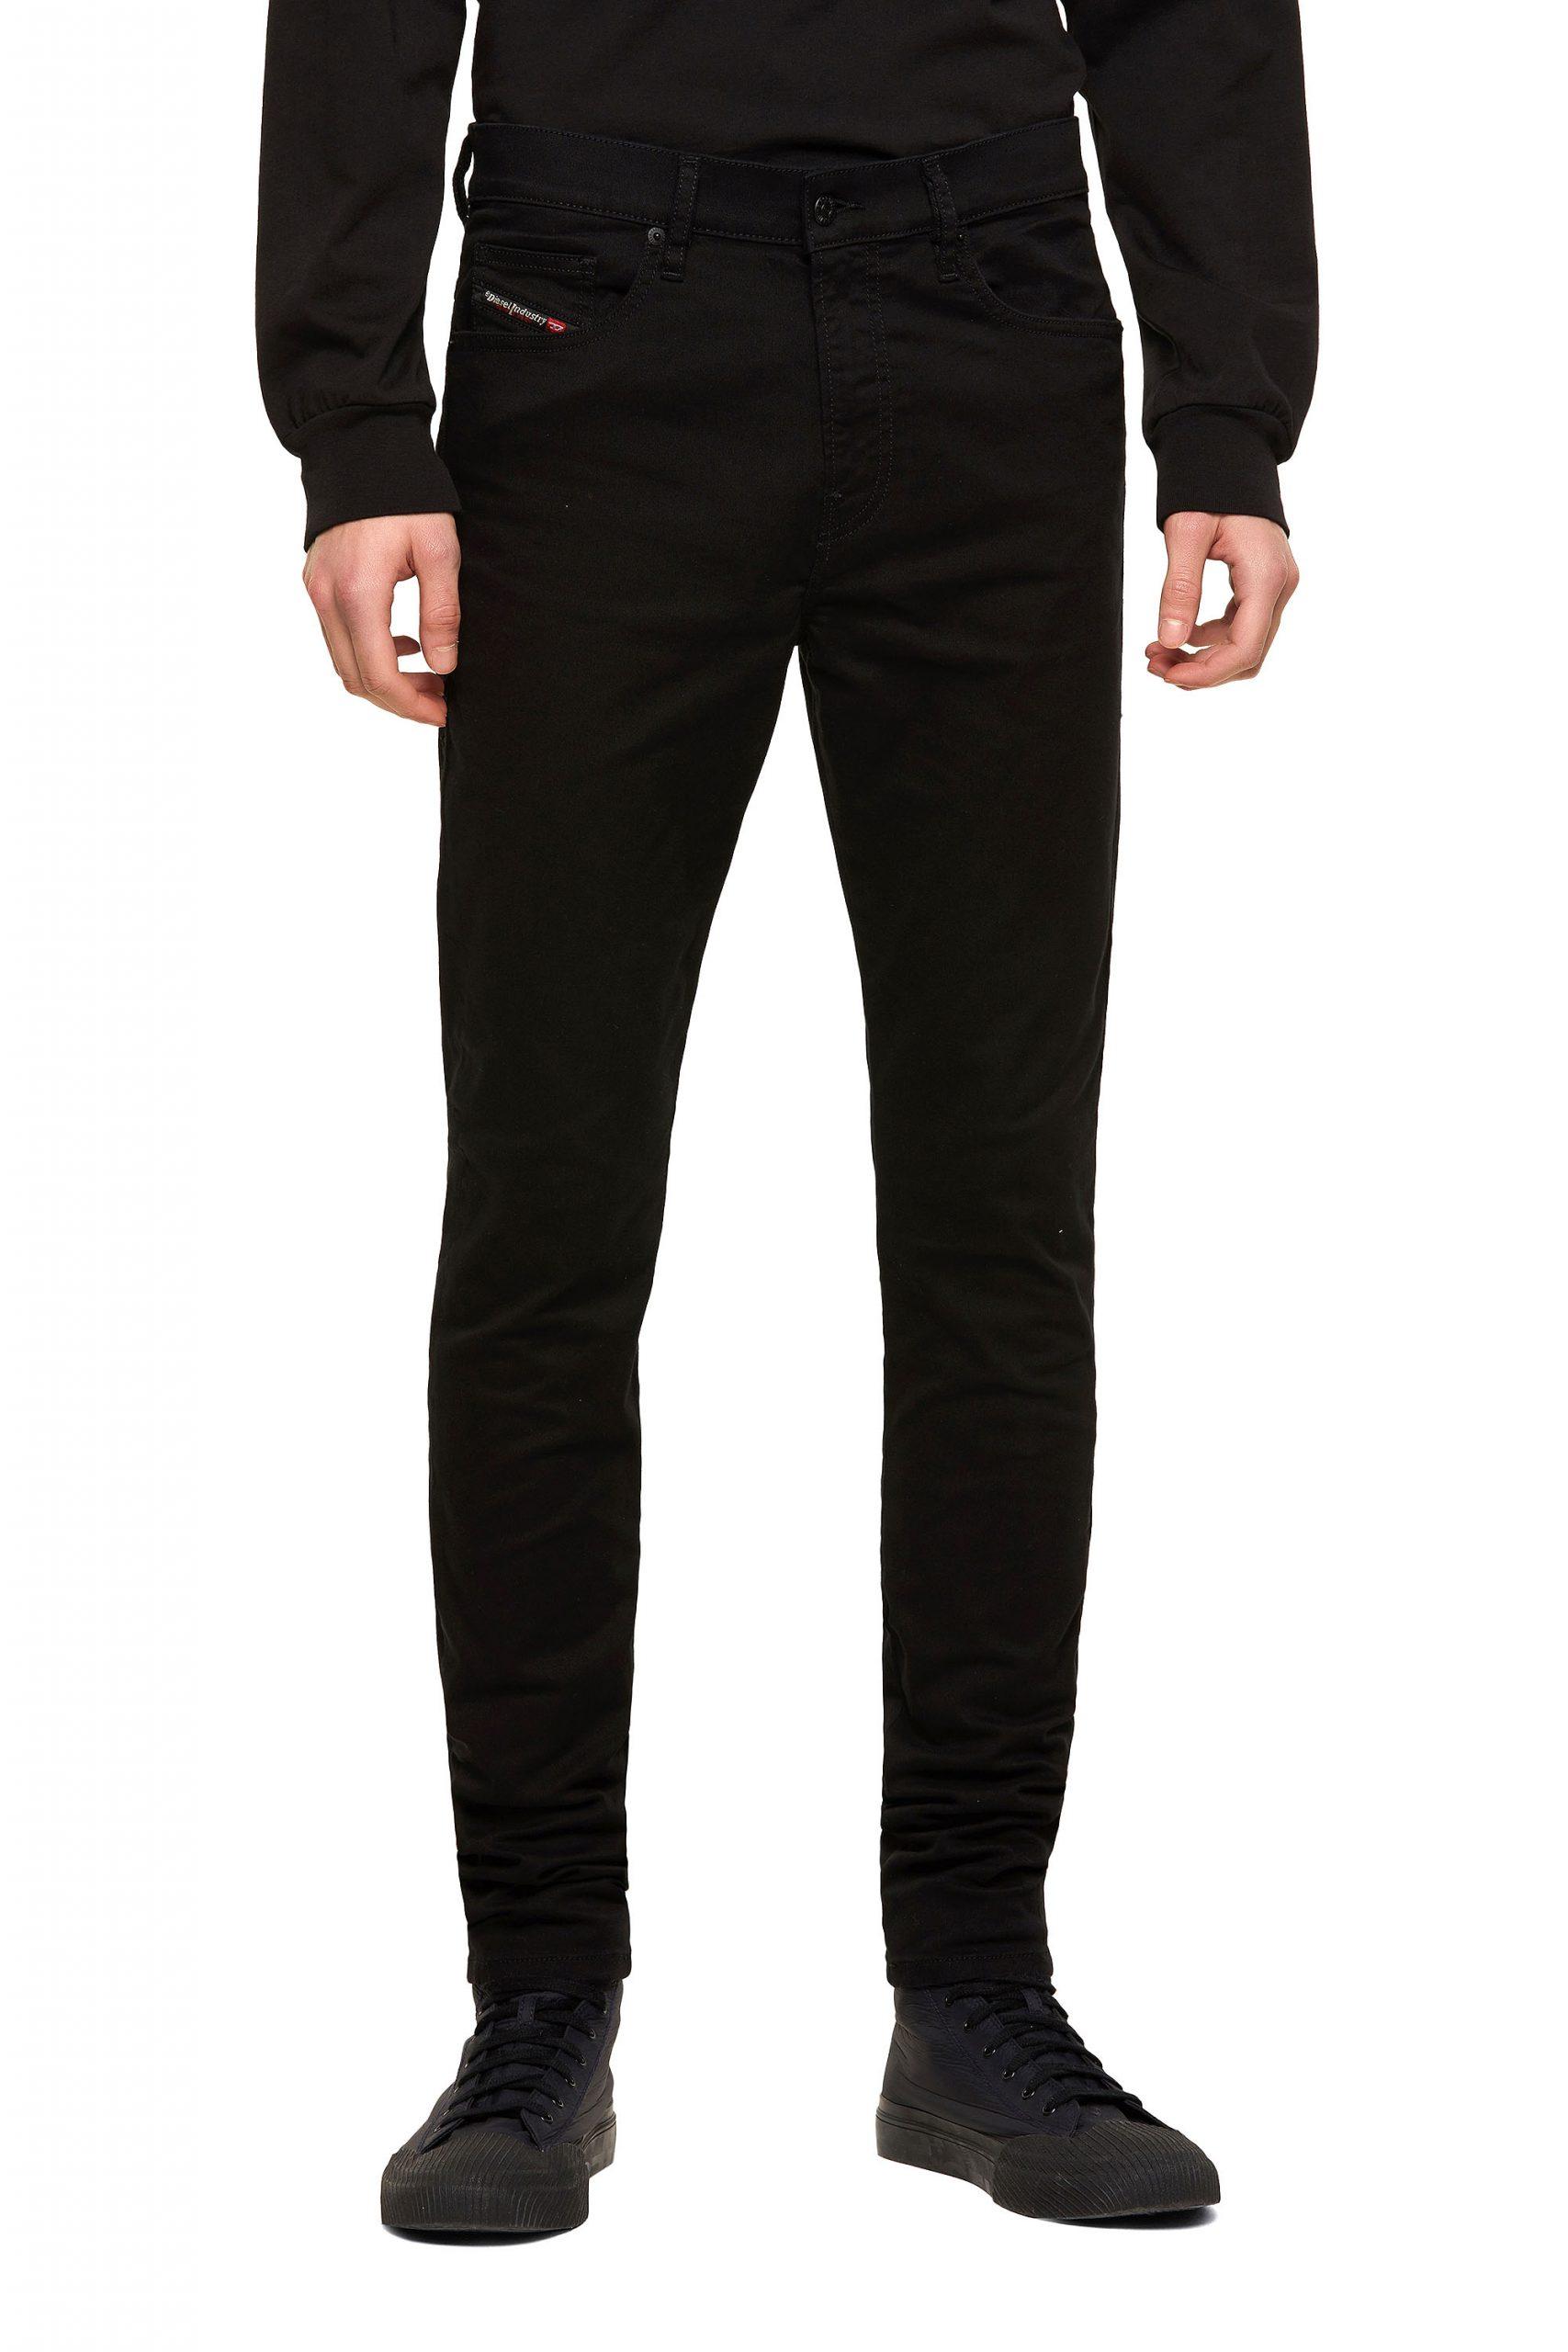 Wordt erger Verlating Raar DIESEL D-amny Stretch Skinny Jeans 069ei in Black for Men | Lyst